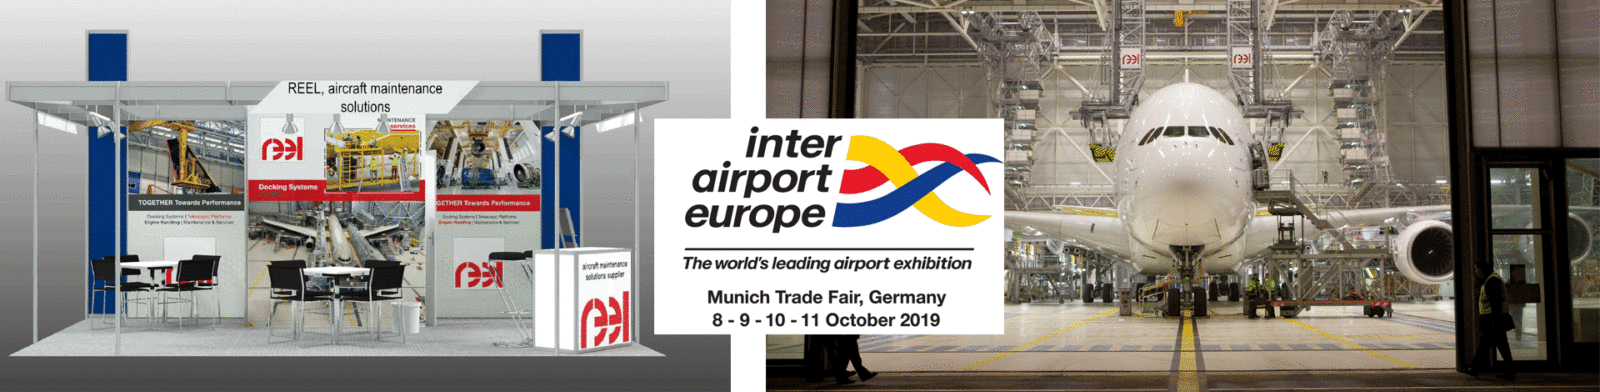 Aeronautic Interairport Exhibition